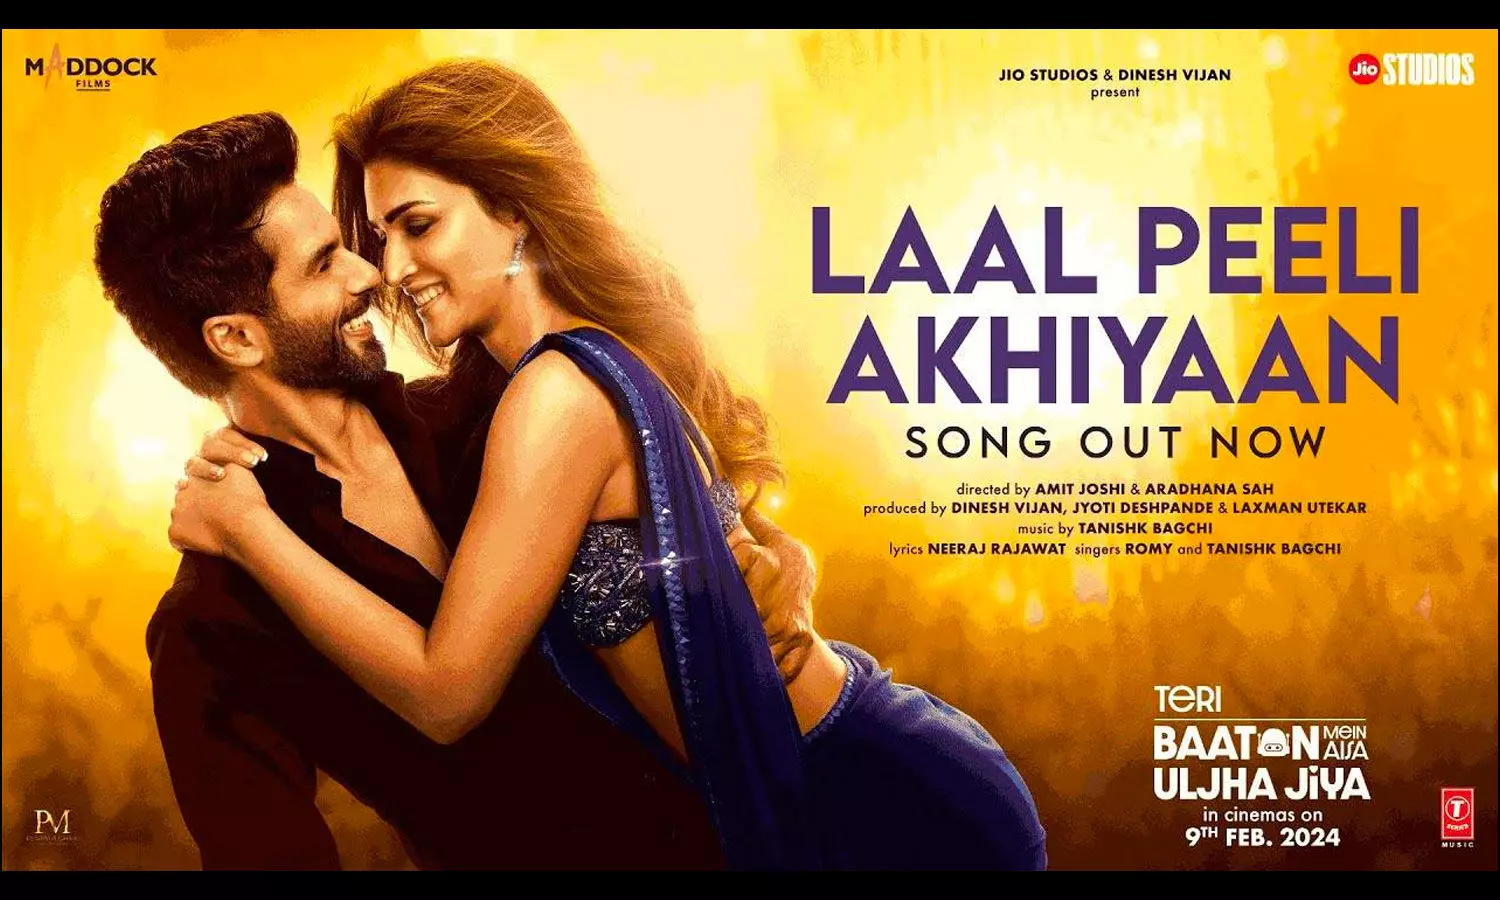 Shahid Kapoor, Kriti Sanons Teri Baaton Mein Aisa Uljha Jiya Makes a Decent Splash at the Box Office Despite Mixed Reviews and Modest Advance Bookings